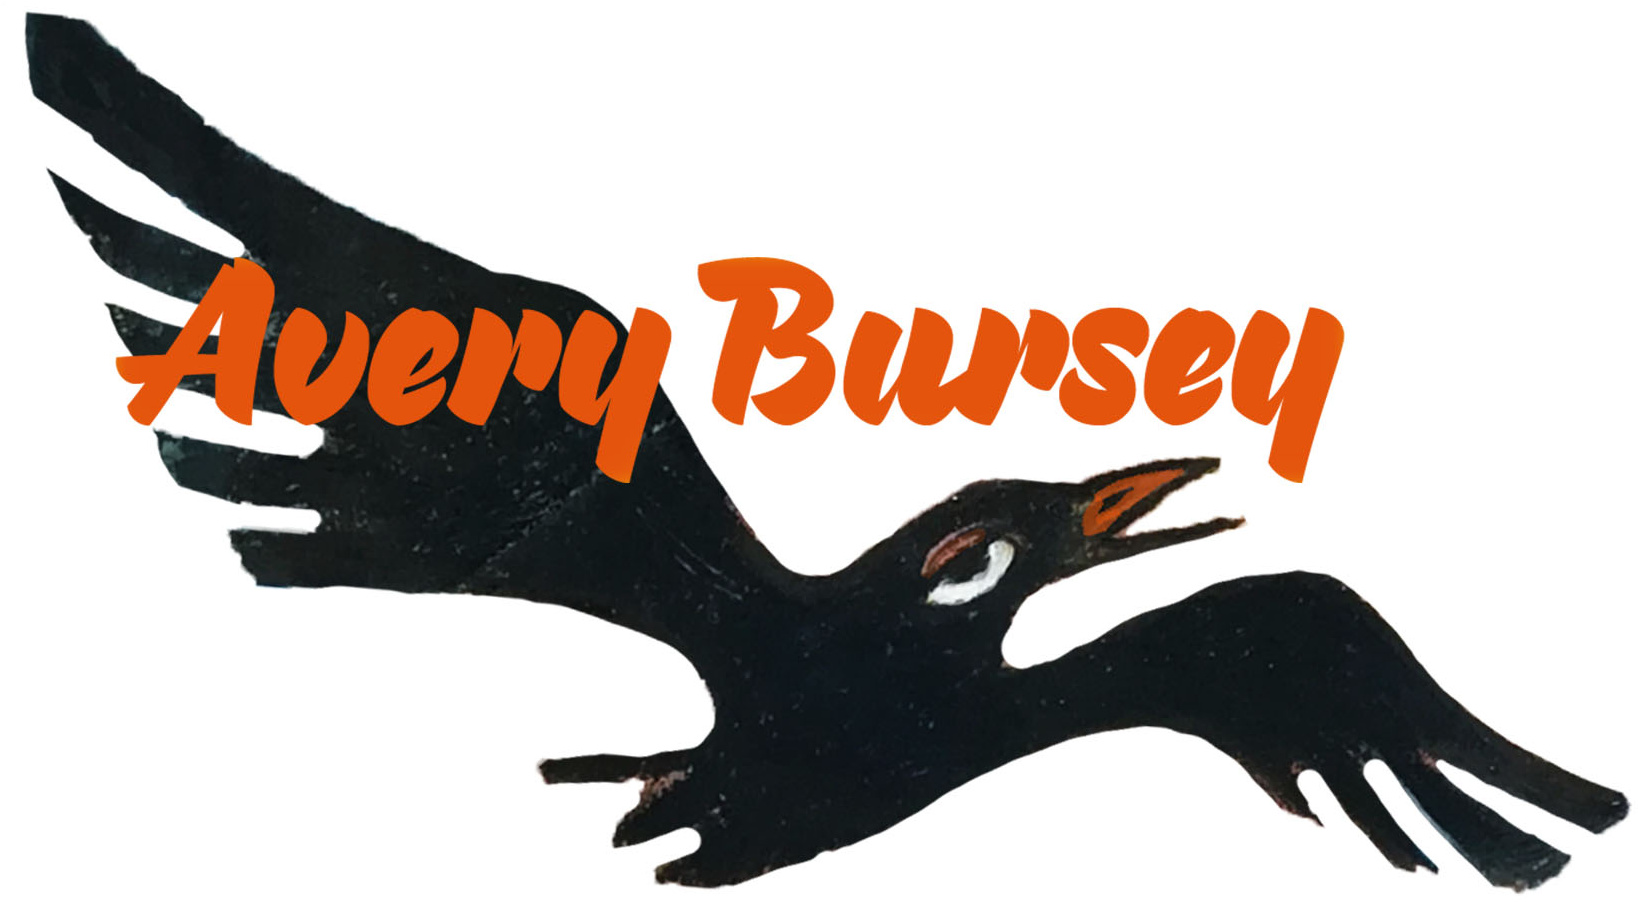 Avery Bursey 